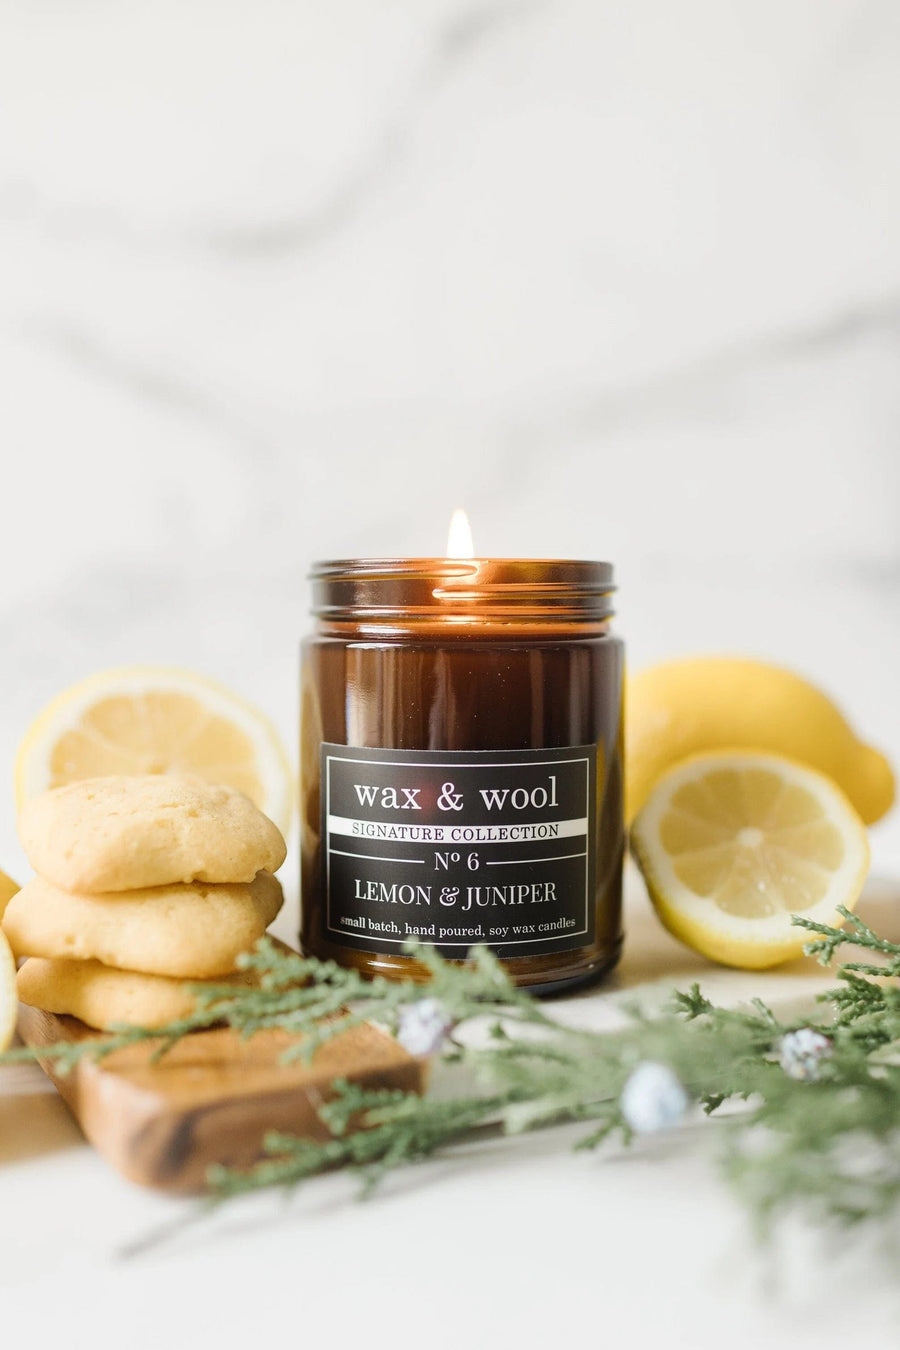 wax & wool Candle Lemon & Juniper 9oz Pure Soy Wax Candle - Amber Jar